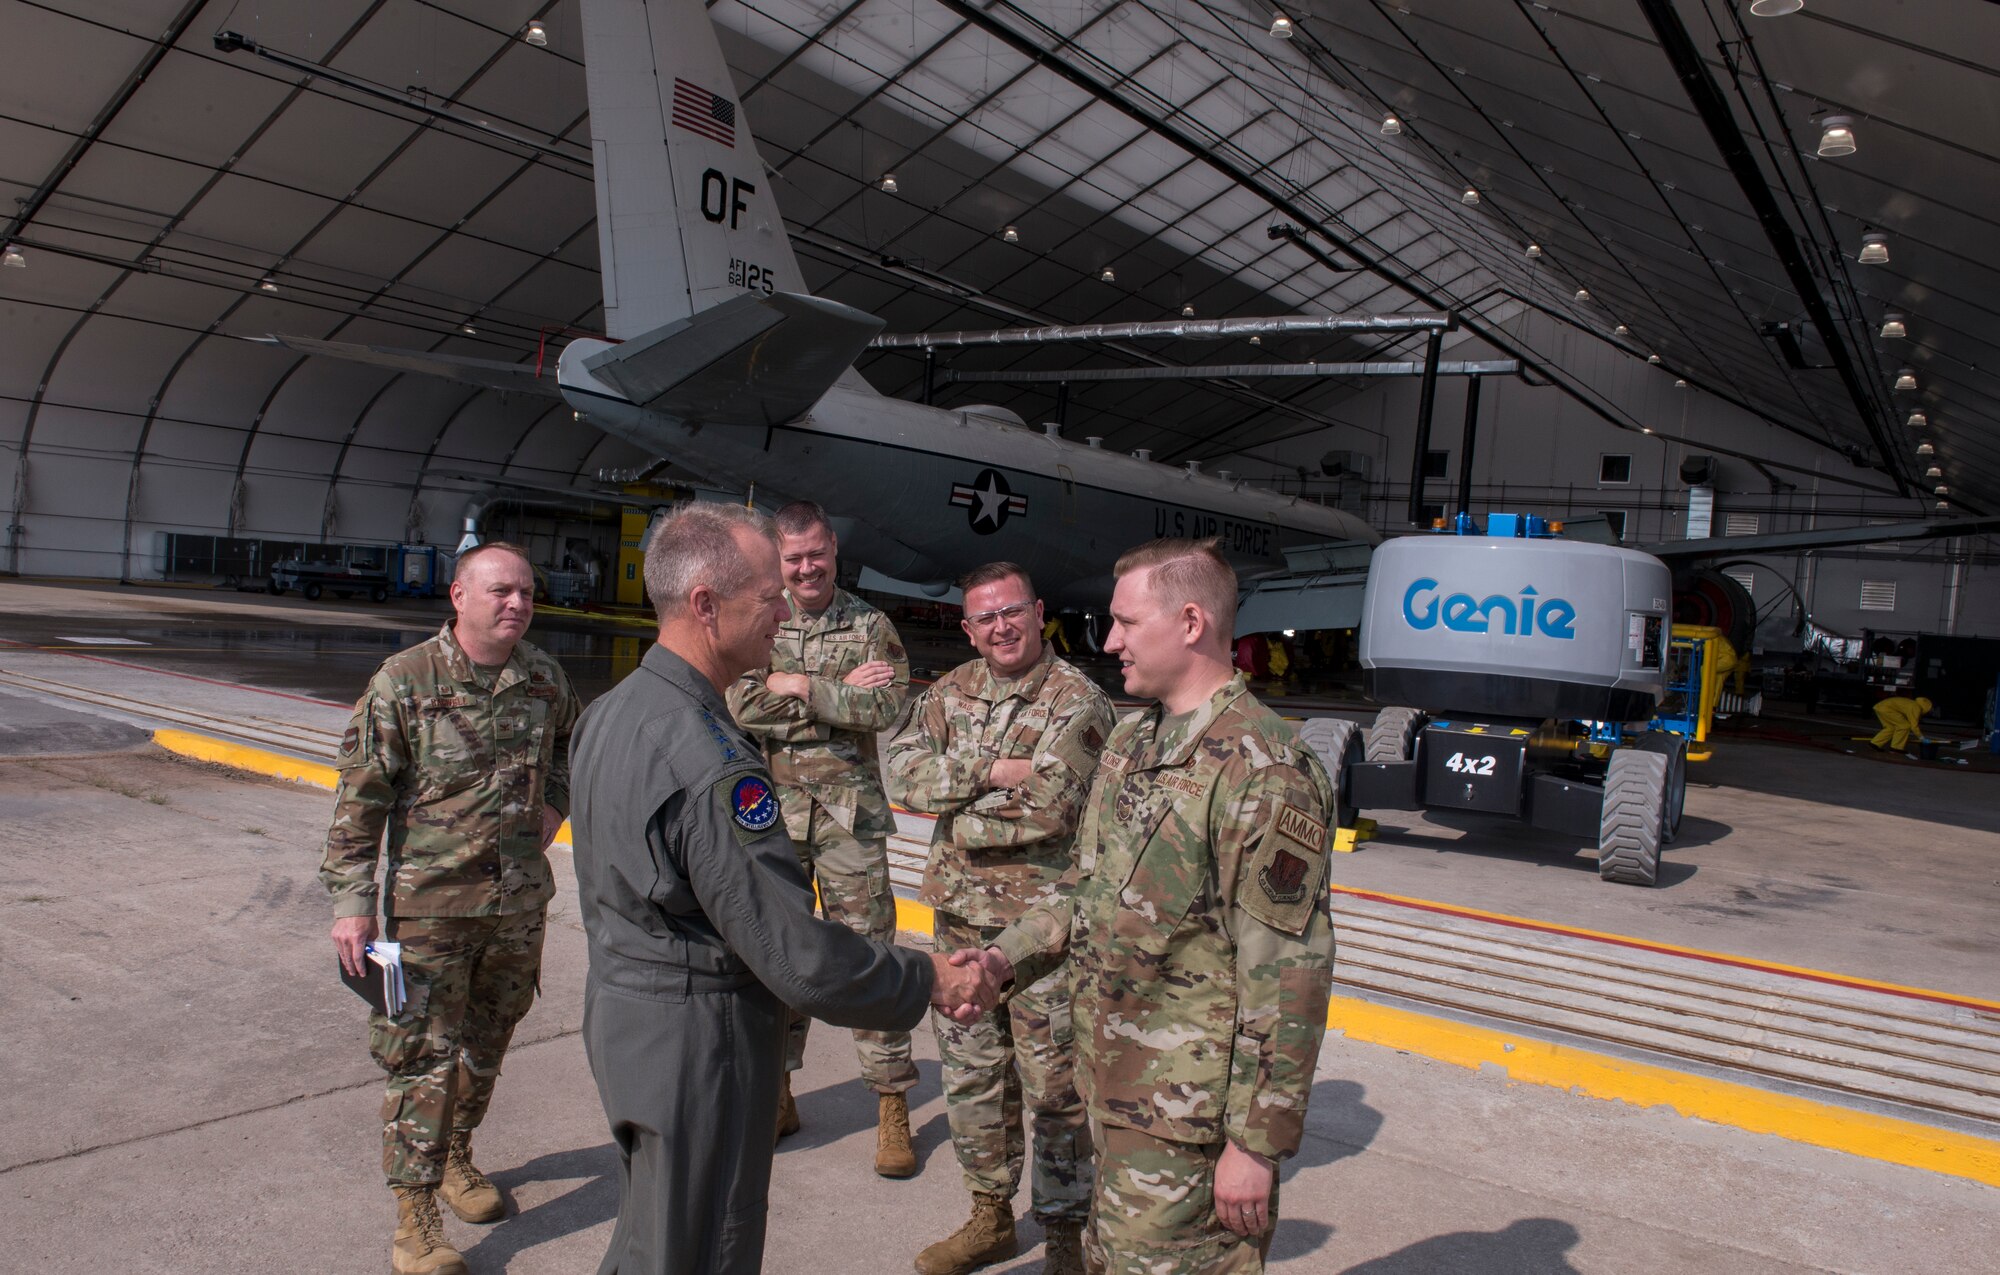 A group of uniformed Air Force Airmen talk and shake hands outside an aircraft hangar.